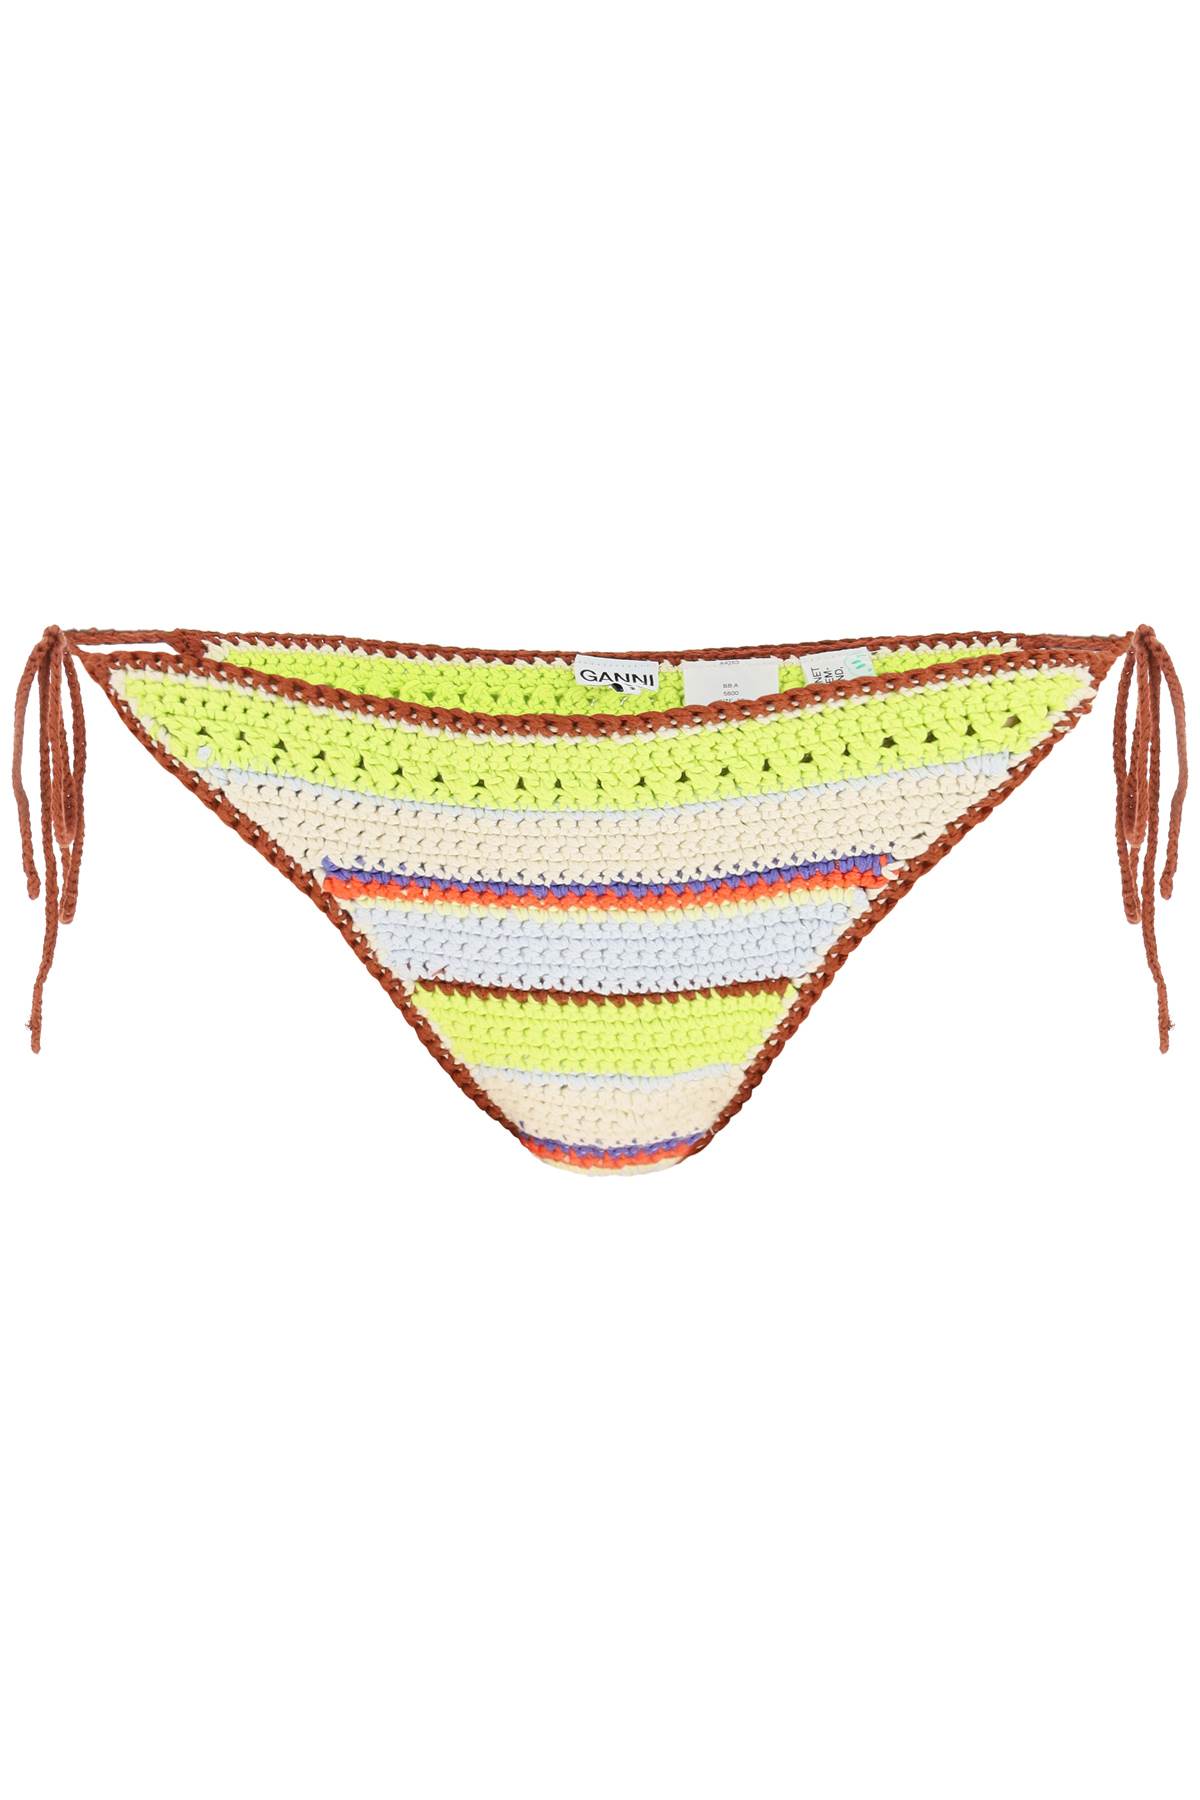 Ganni Multicolor Crochet Bikini Bottom